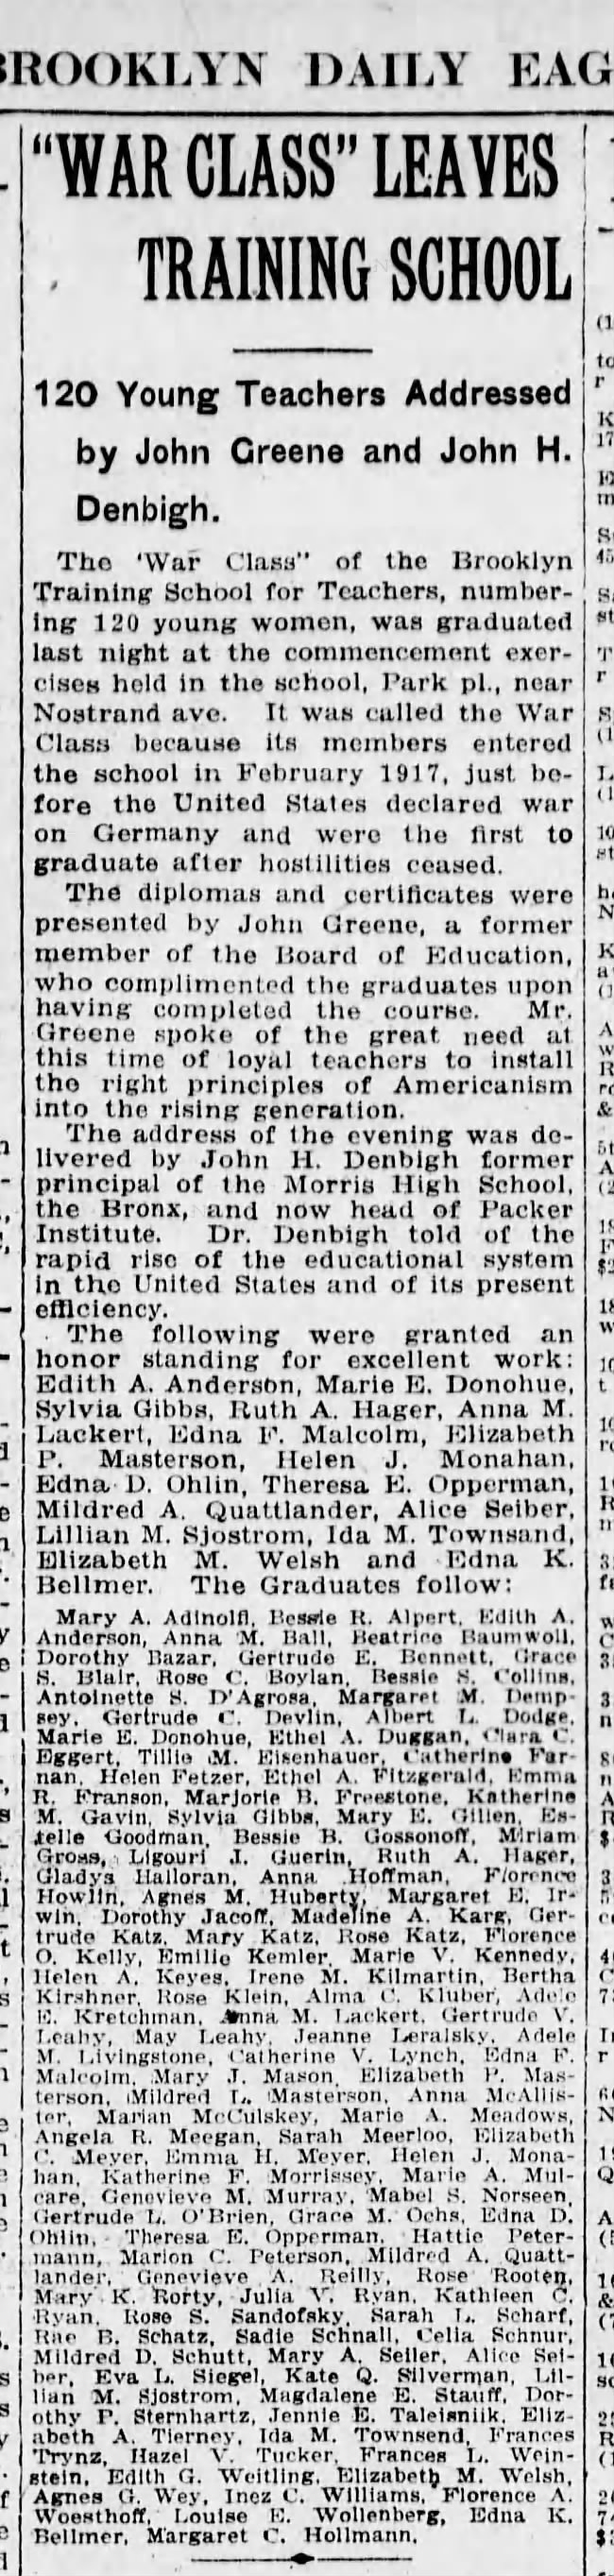 1/29/1919 teaching graduation